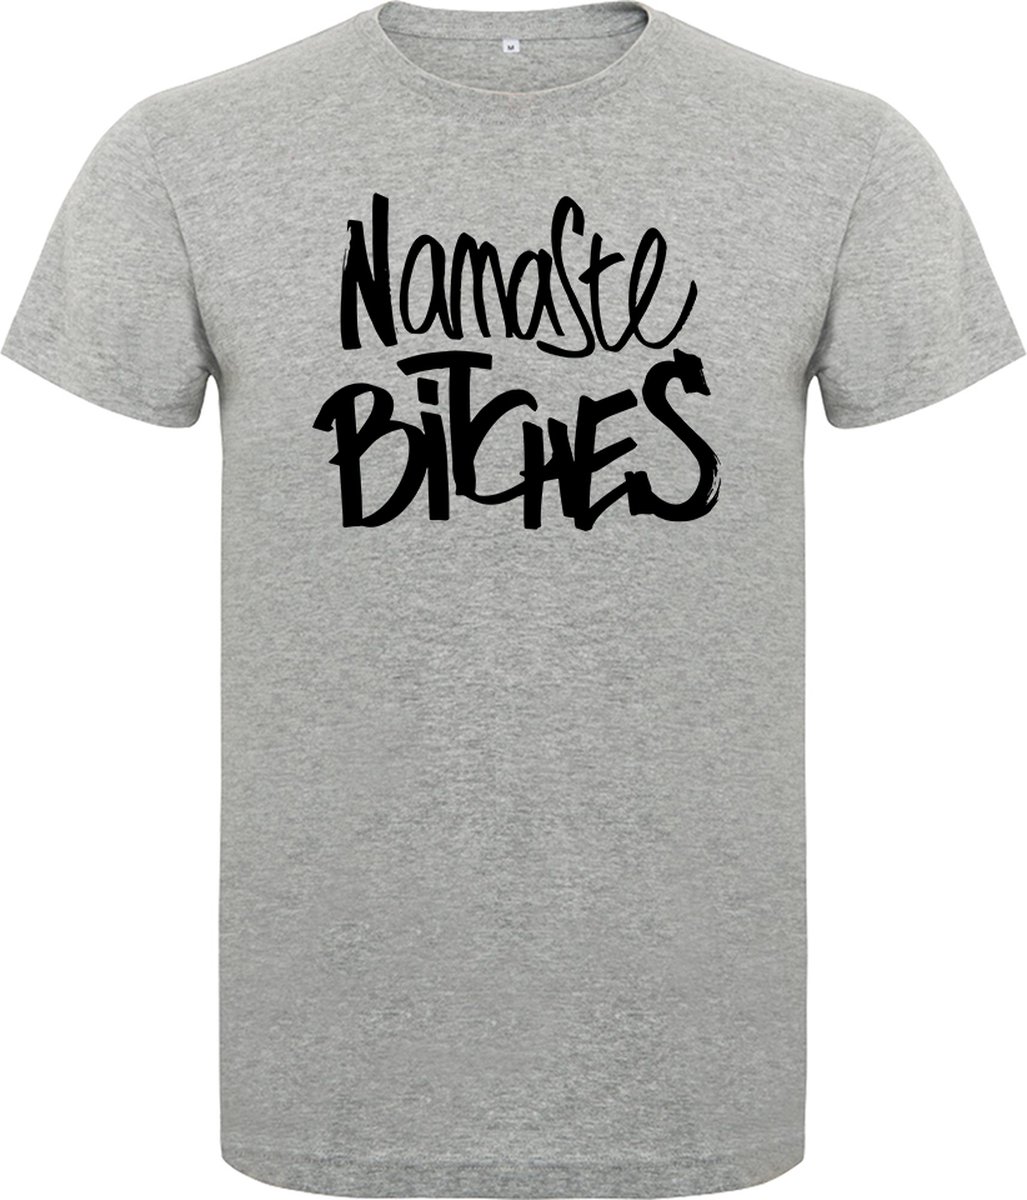 T-Shirt - Casual T-Shirt - Fun T-Shirt - Fun Tekst - Lifestyle T-Shirt - Grappig - Mood - Sport - Yoga - Relax - Vibe - Namaste Bitches - Maat XXL - 2XL